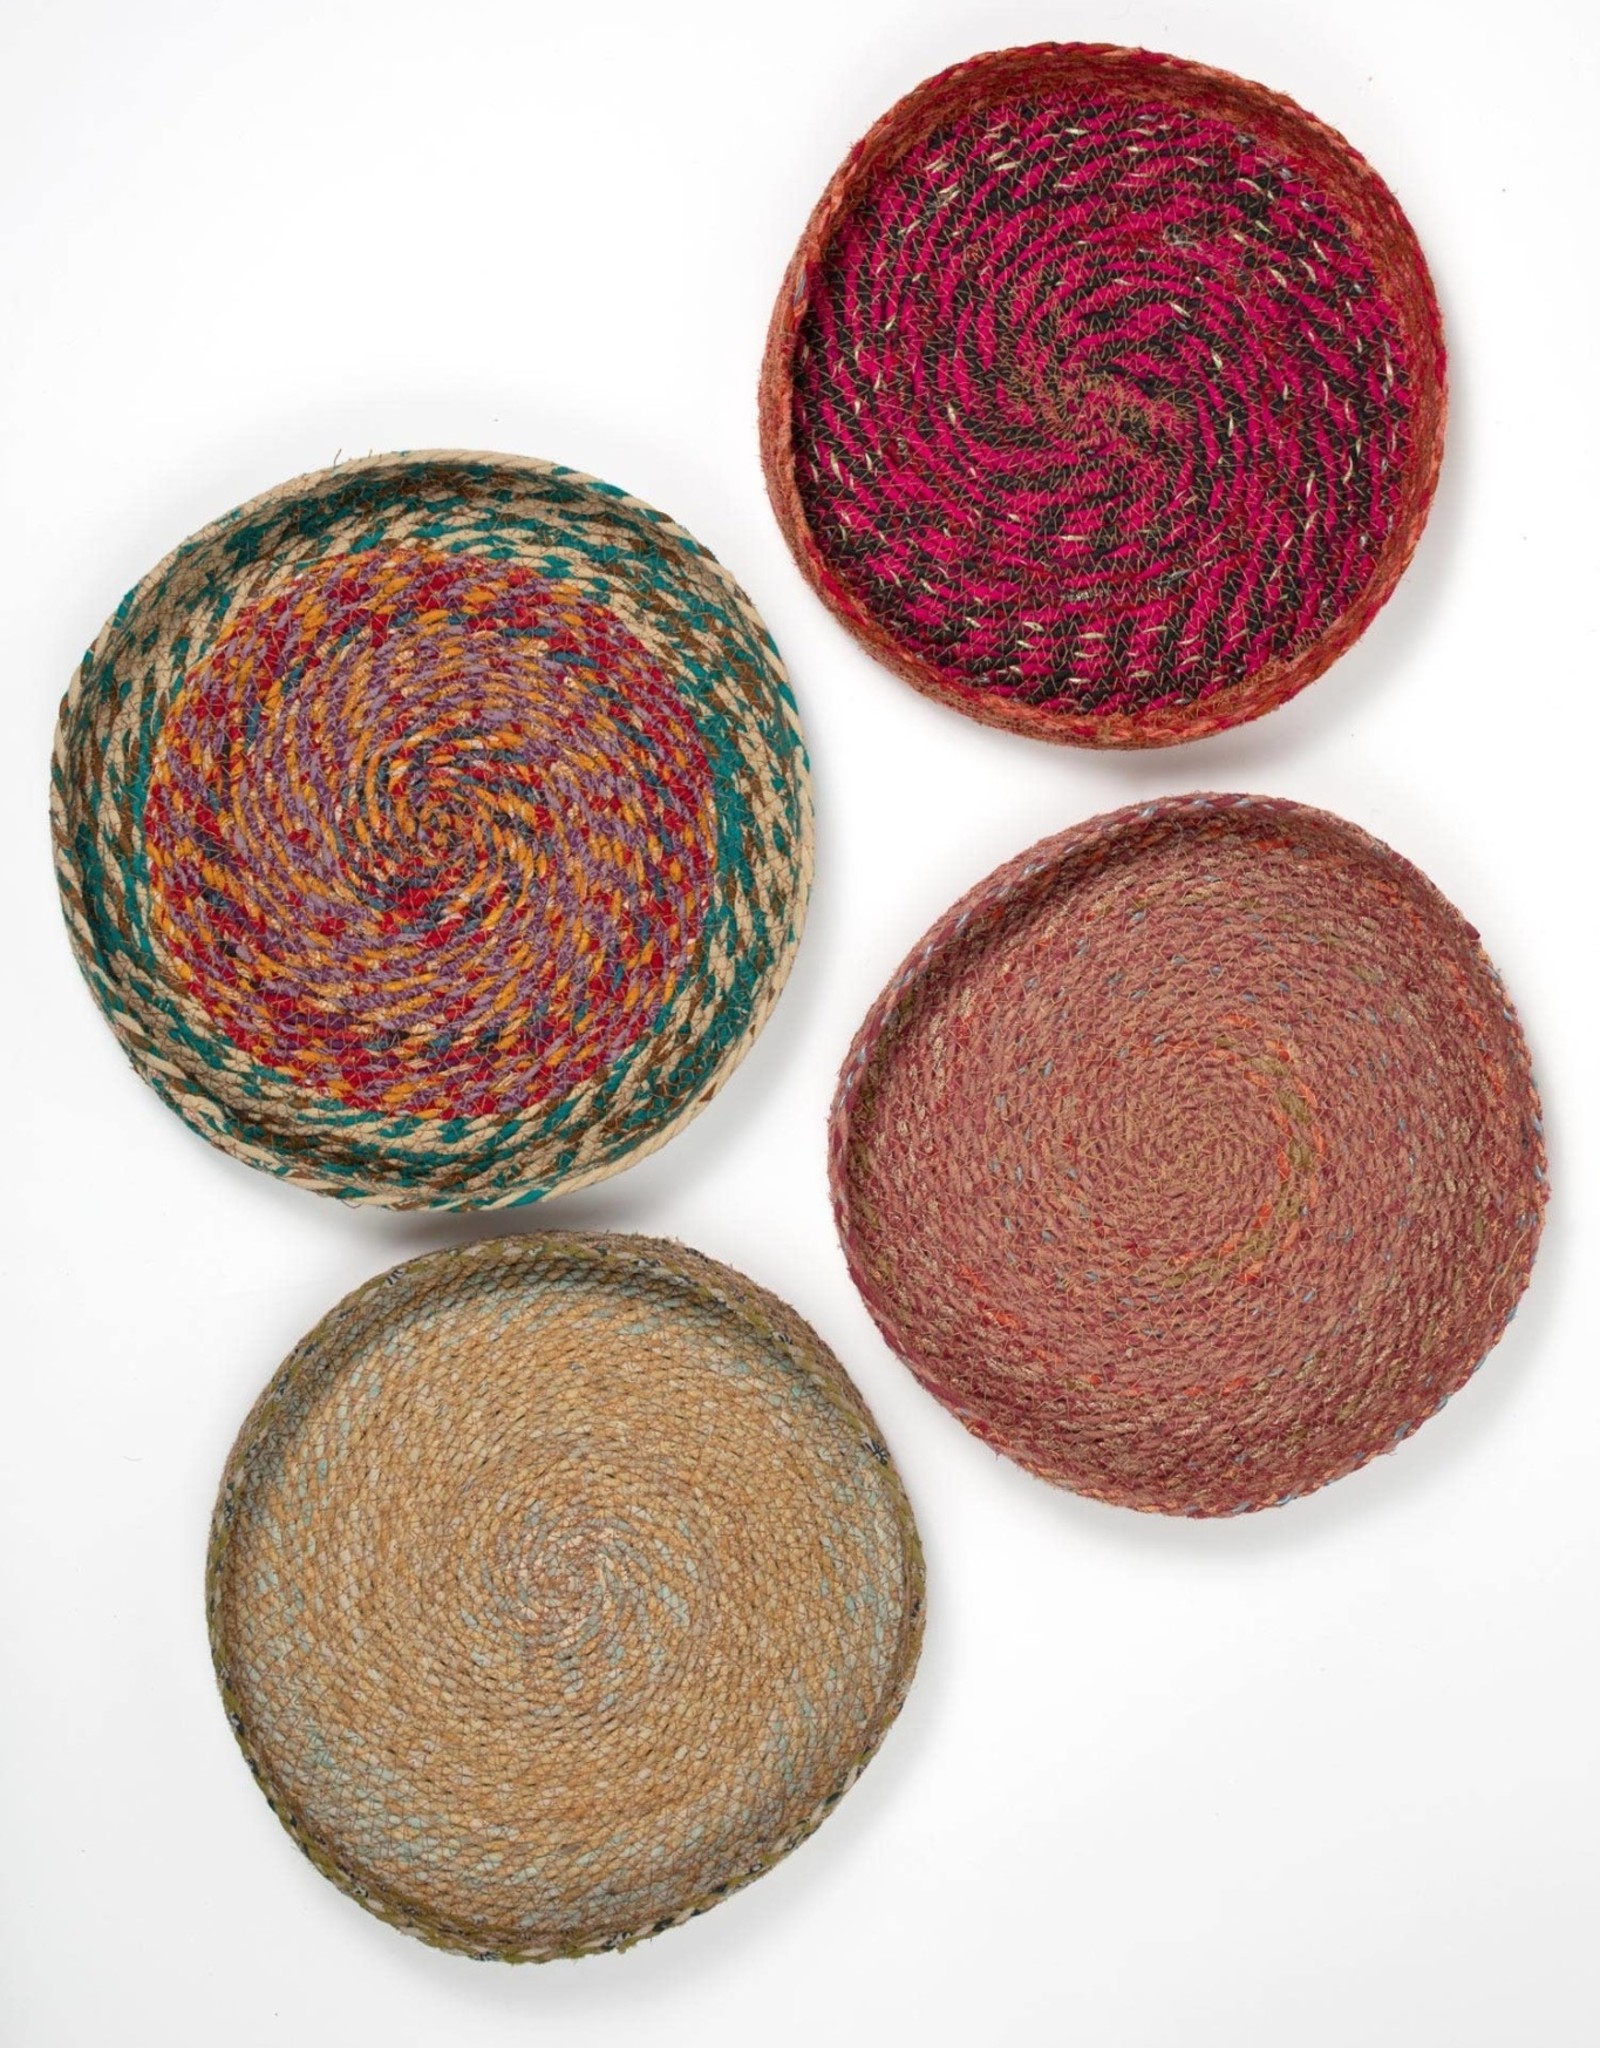 Ten Thousand Villages Stitched Sari Fabric Tray - 12"